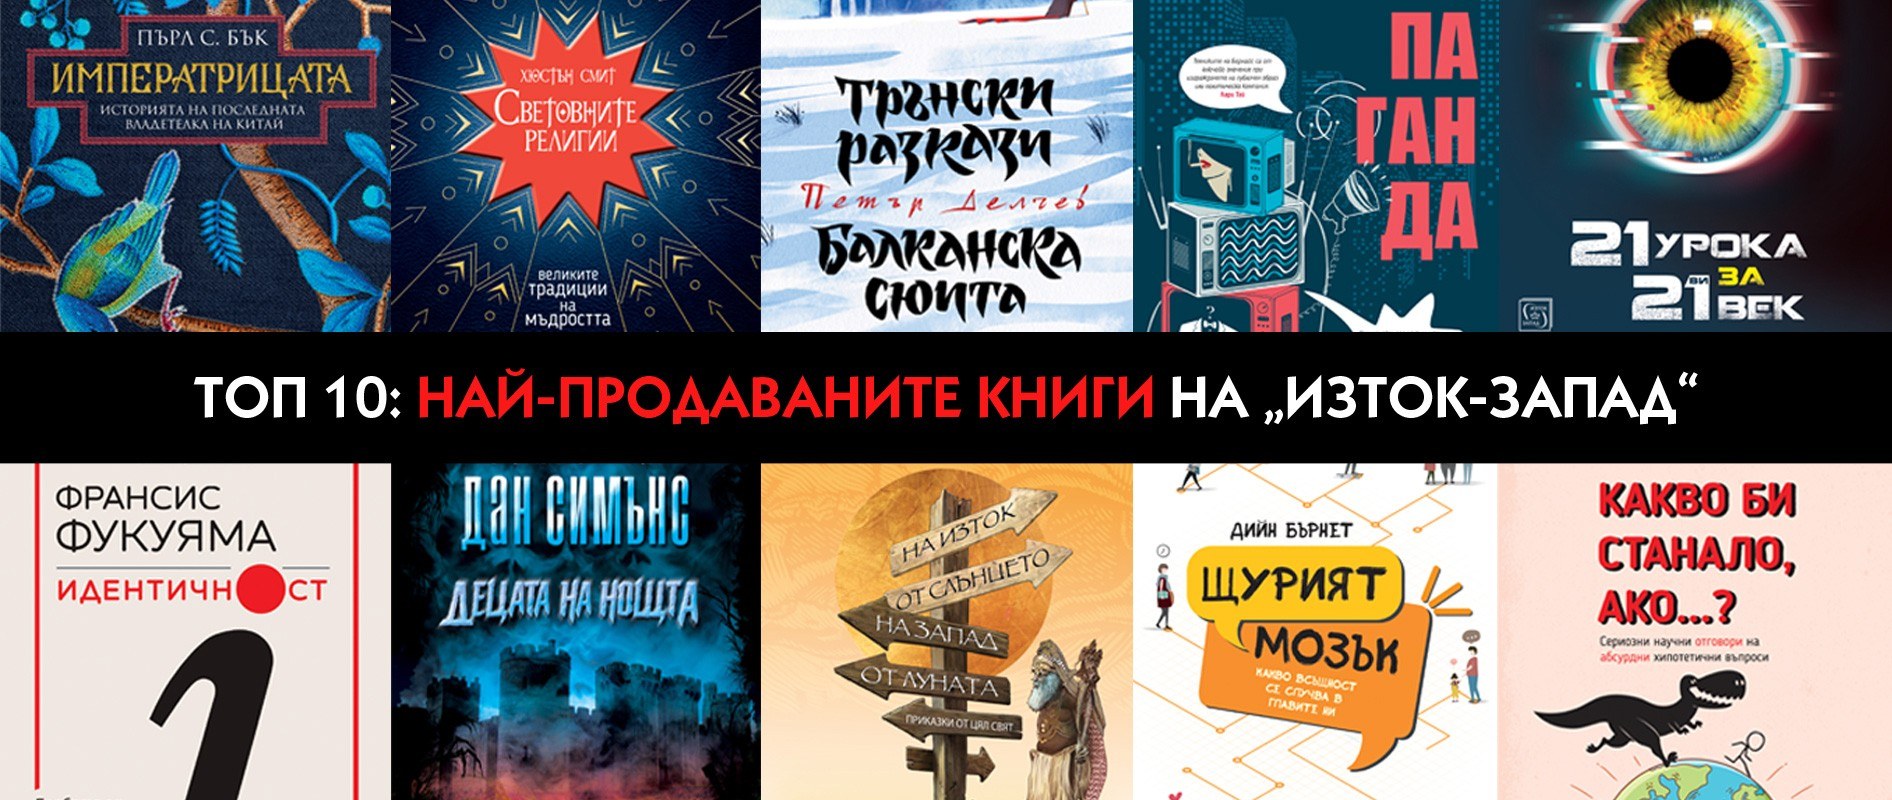 Top 10 at the Spring Book Bazaar 2019 in Sofia, Bulgaria